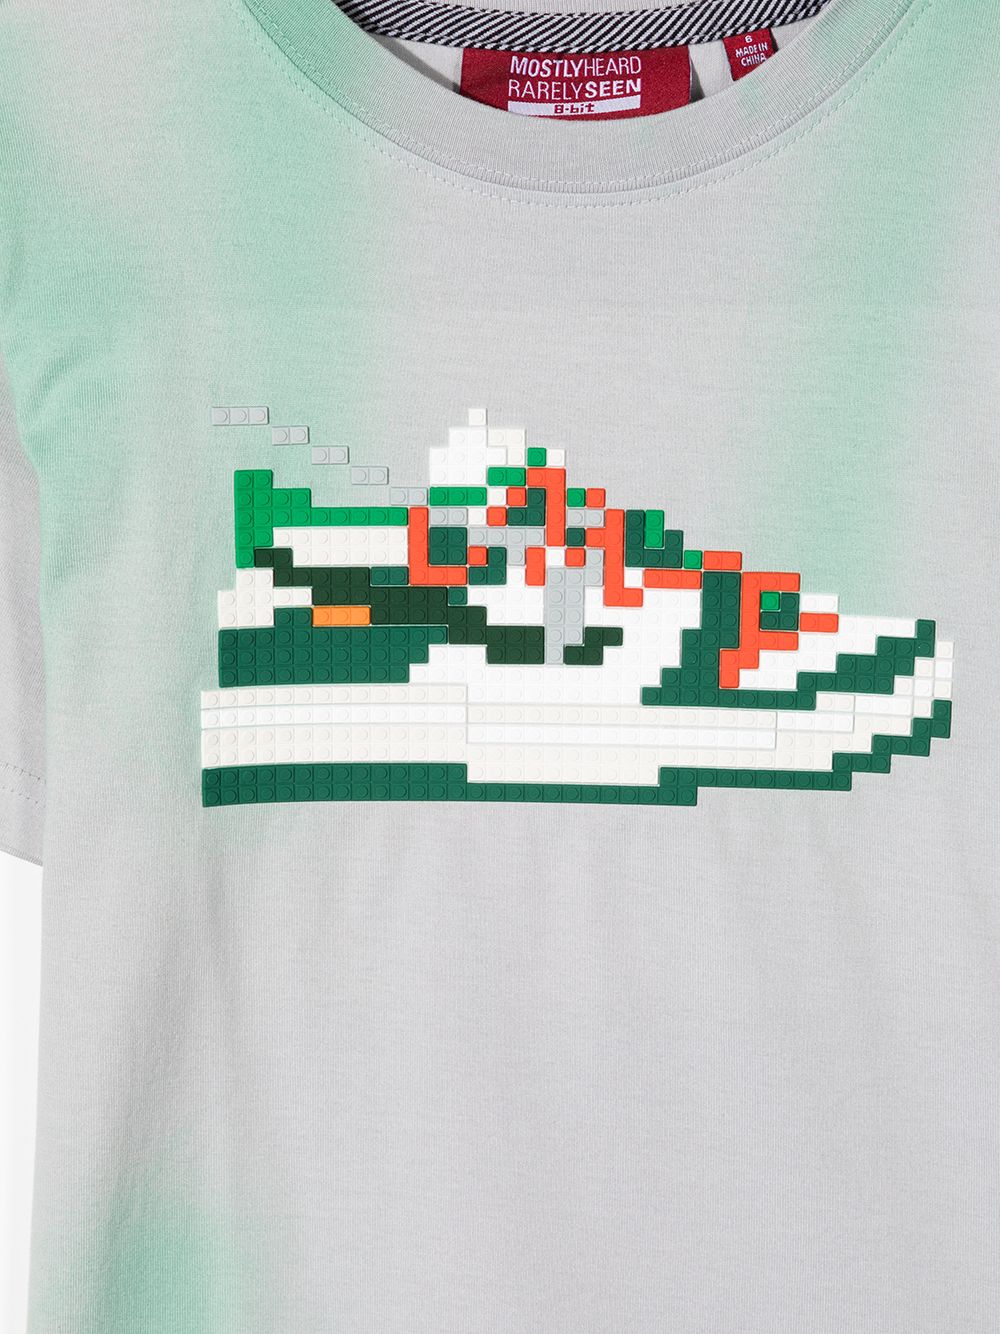 фото Mostly heard rarely seen 8-bit graphic-print cotton t-shirt